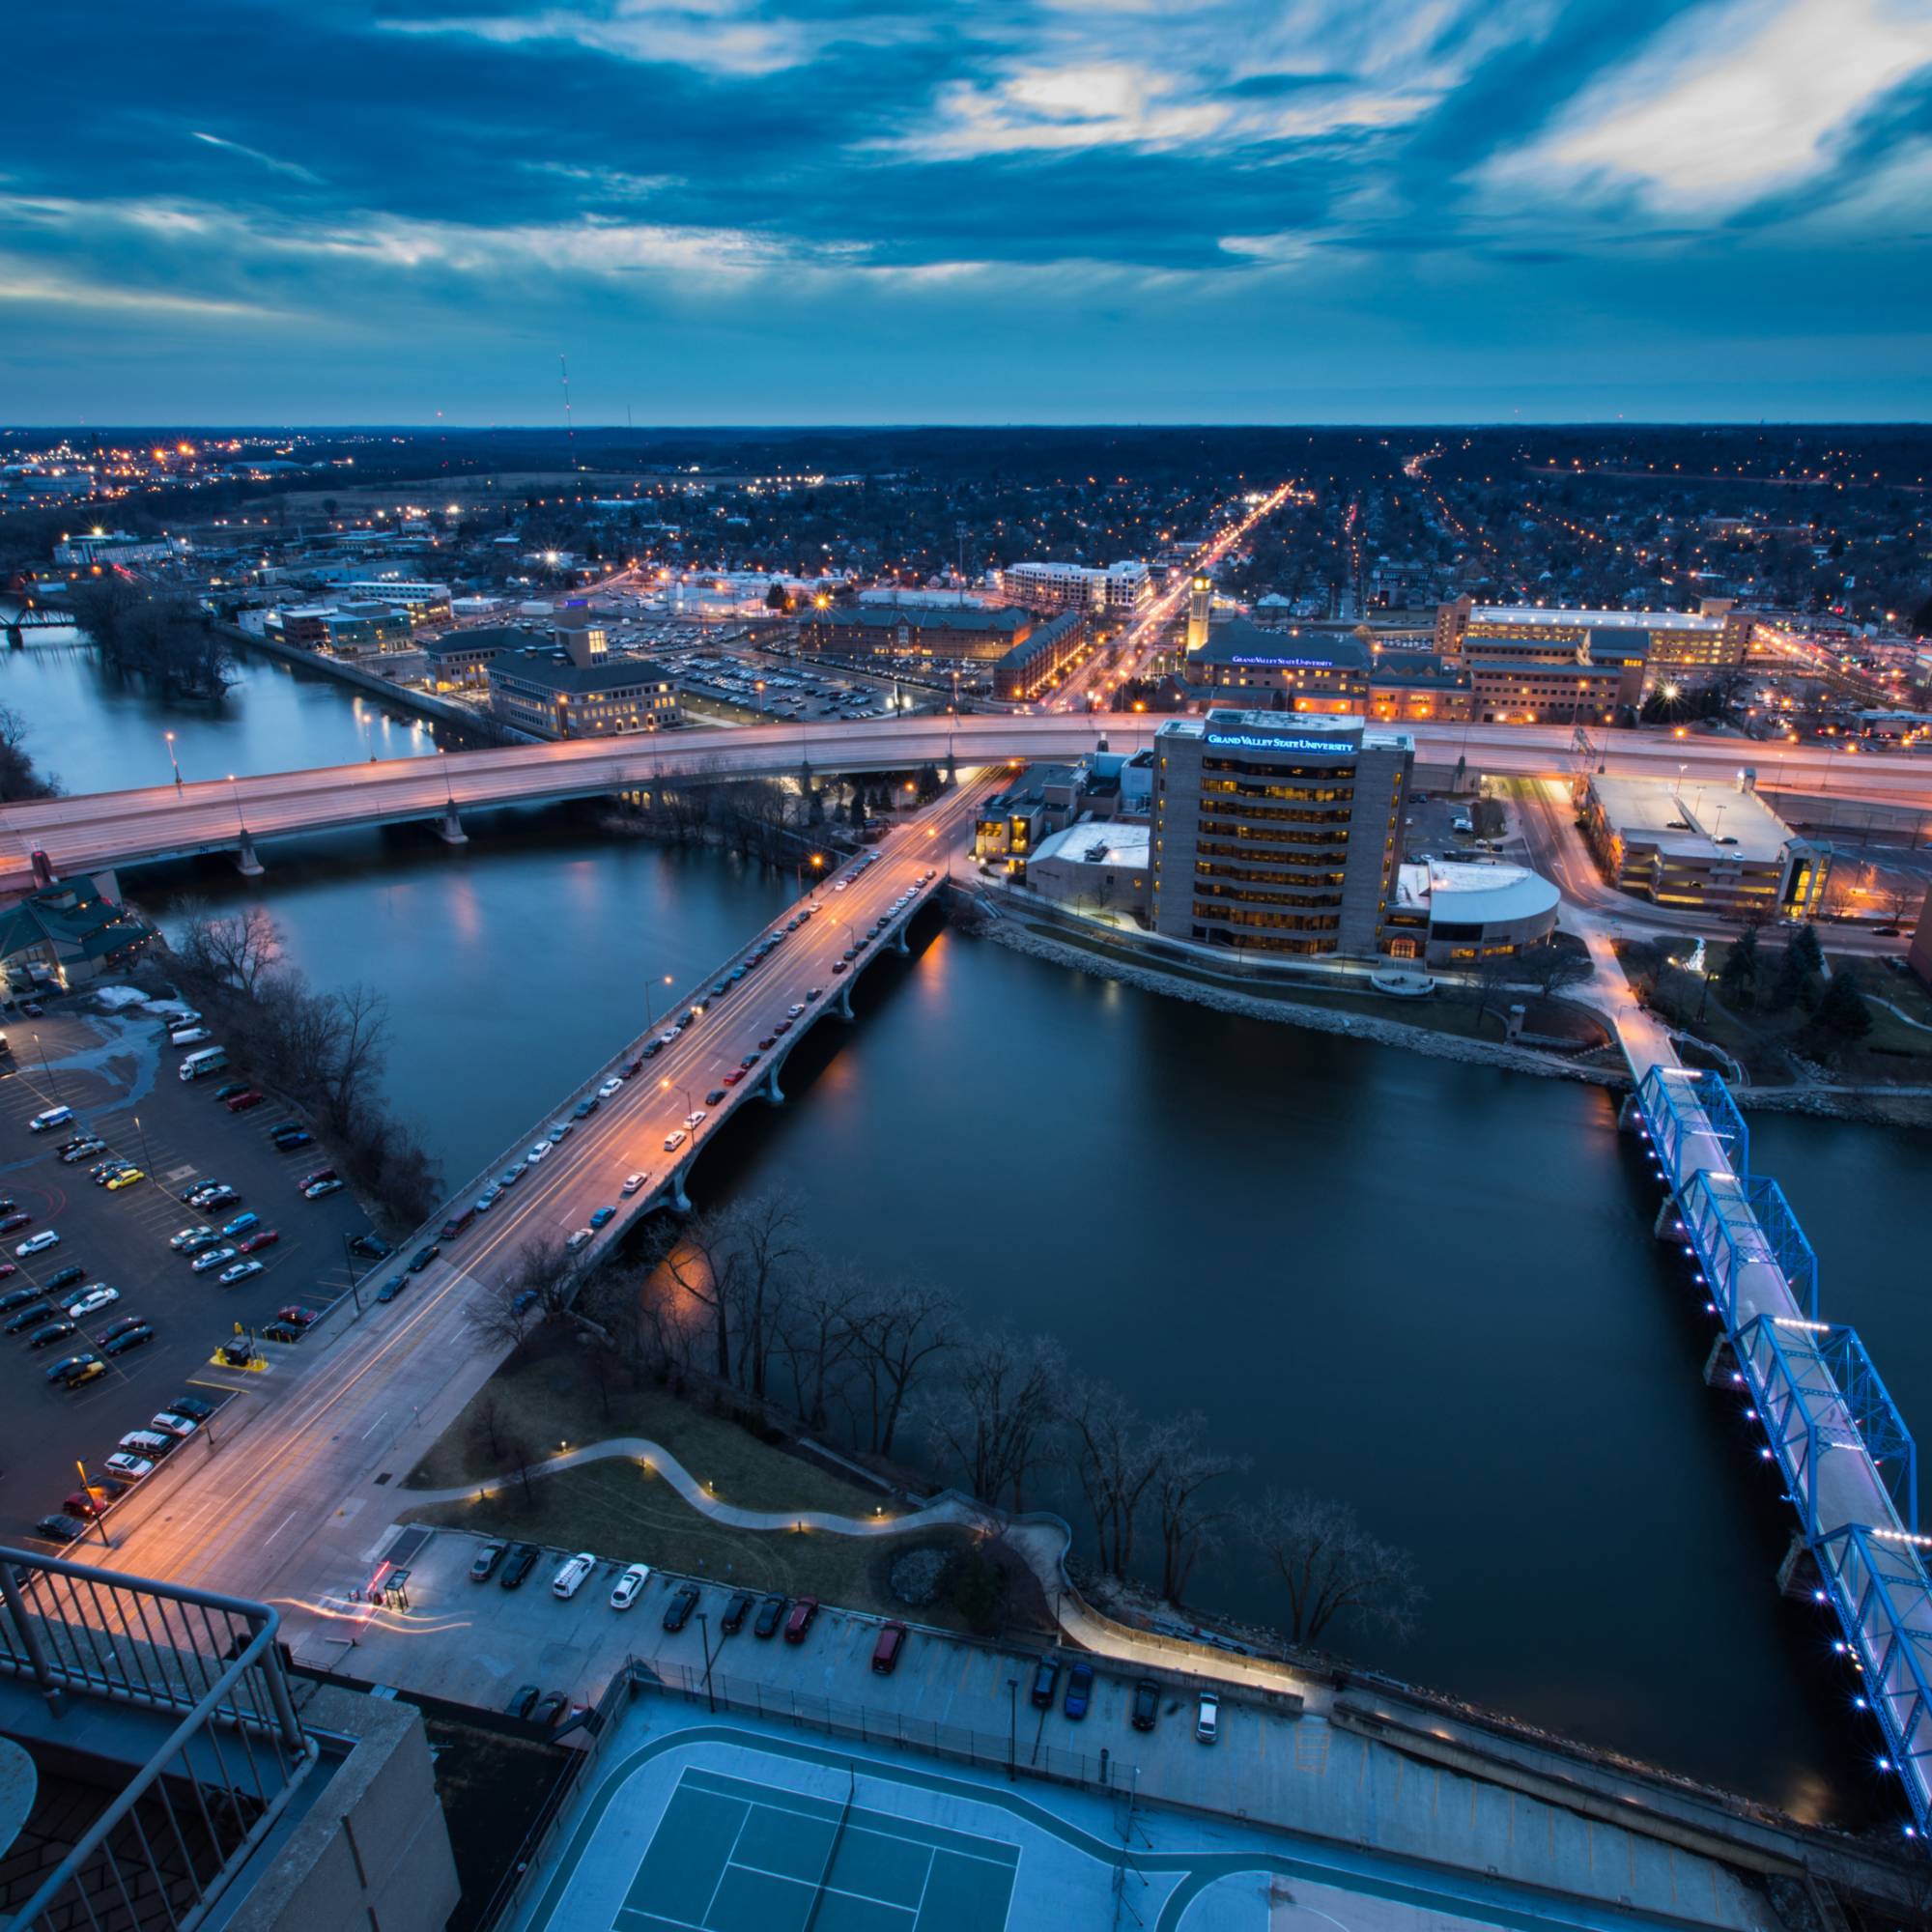 Nighttime, arial view of bridges crossing Grand River in Grand Rapids, MI